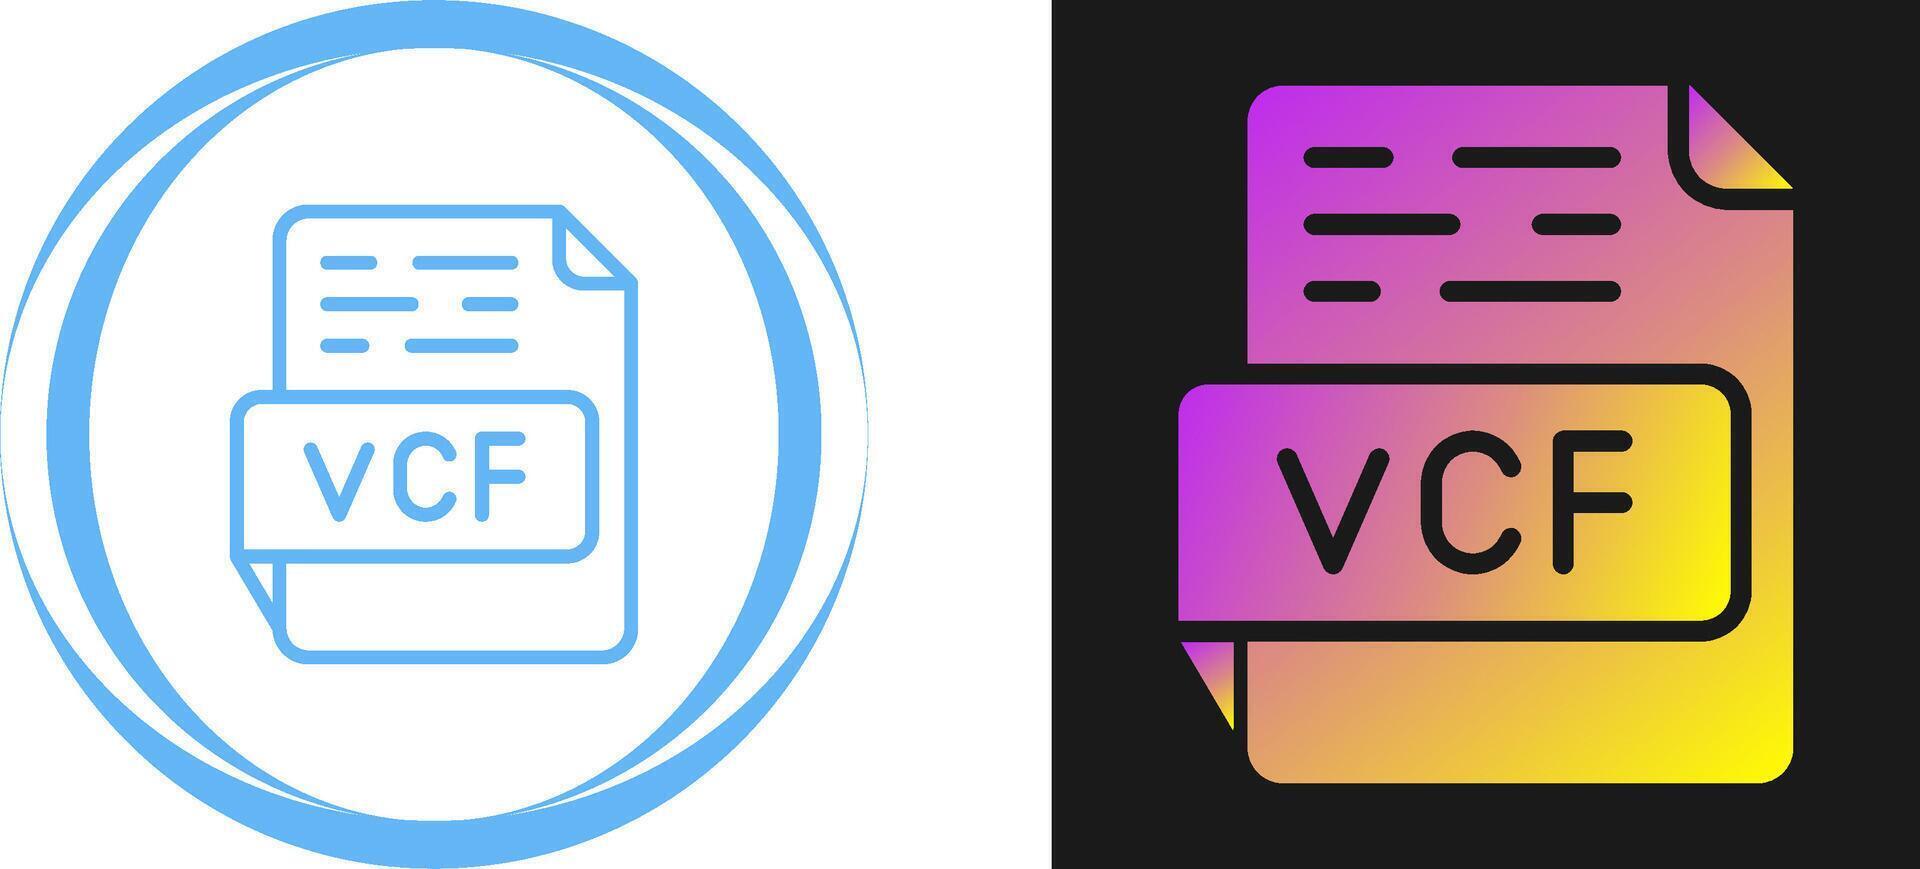 vcf vector icono